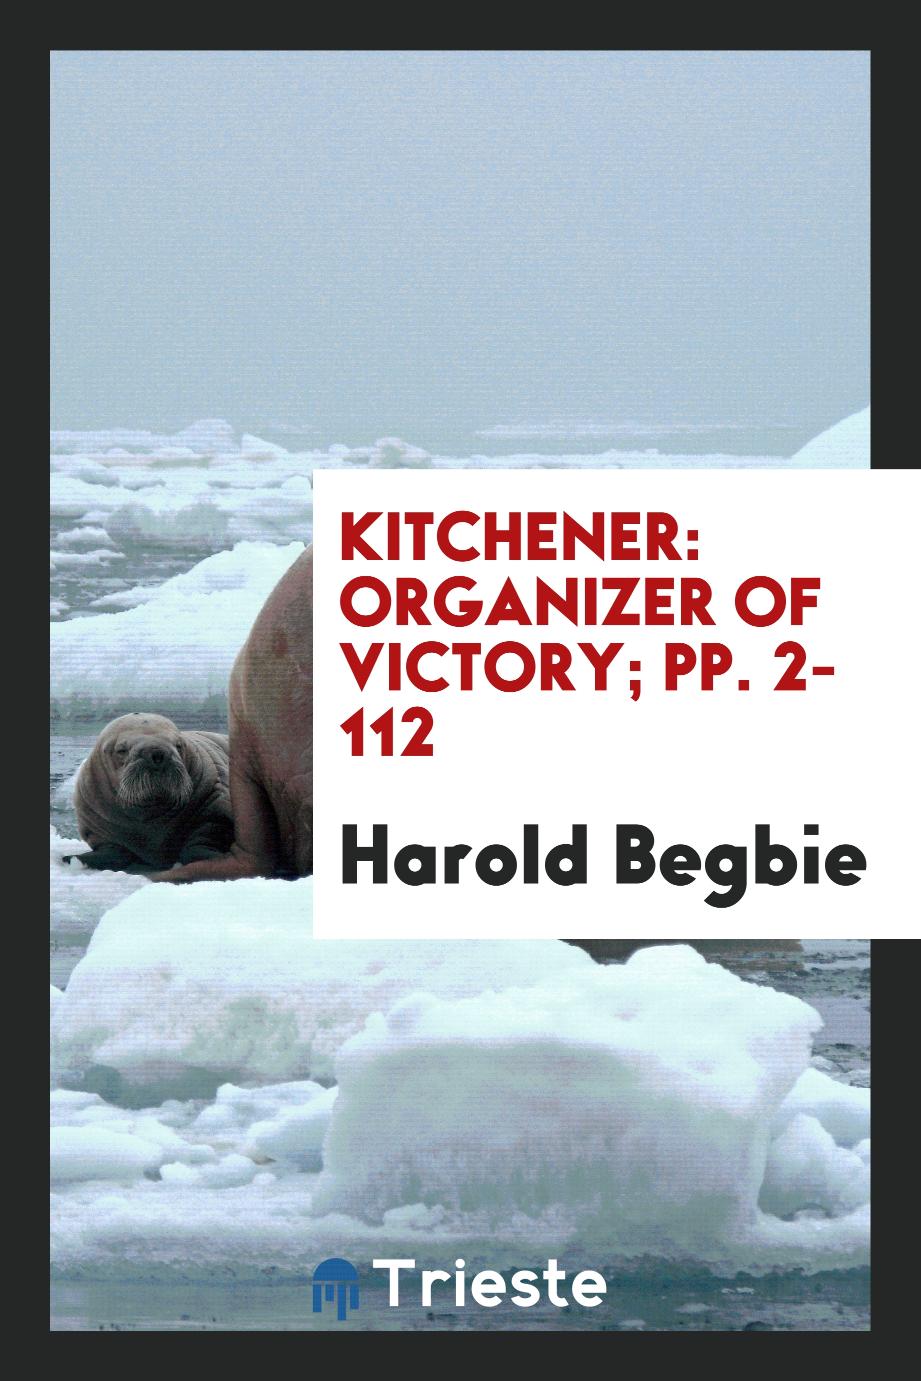 Kitchener: Organizer of Victory; pp. 2-112